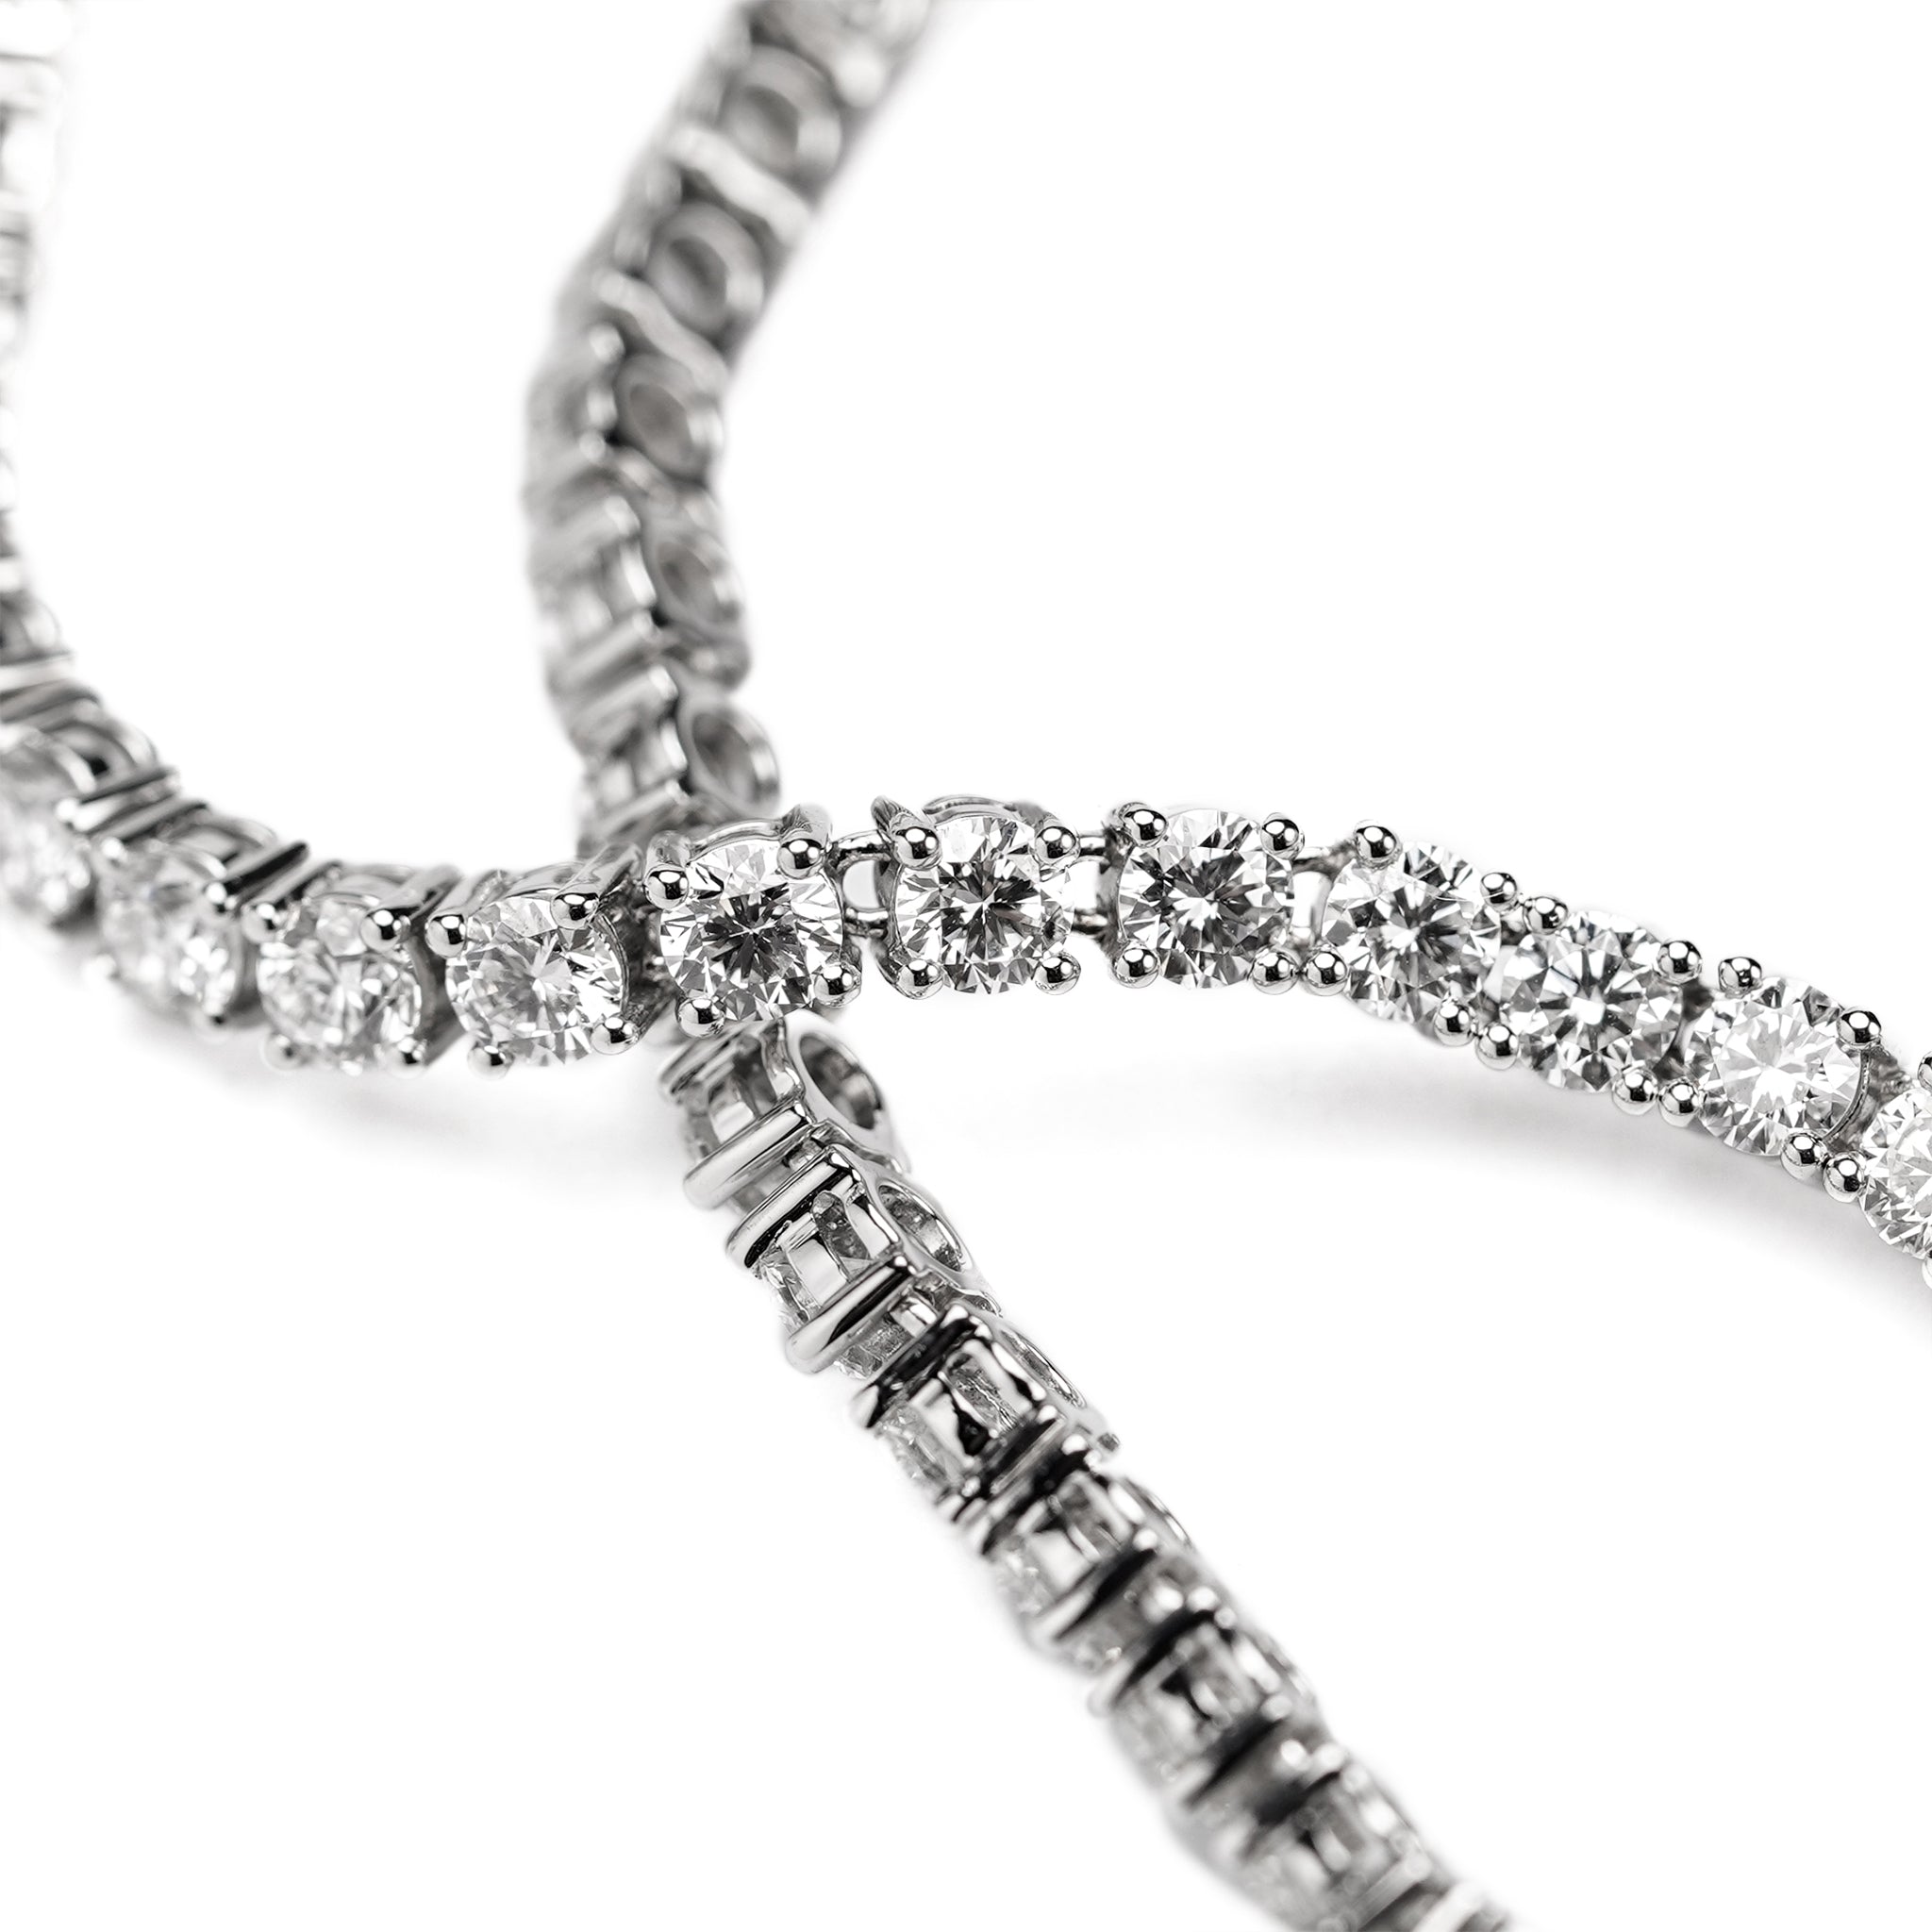 18K White Gold Diamond Tennis Necklace (19CT)